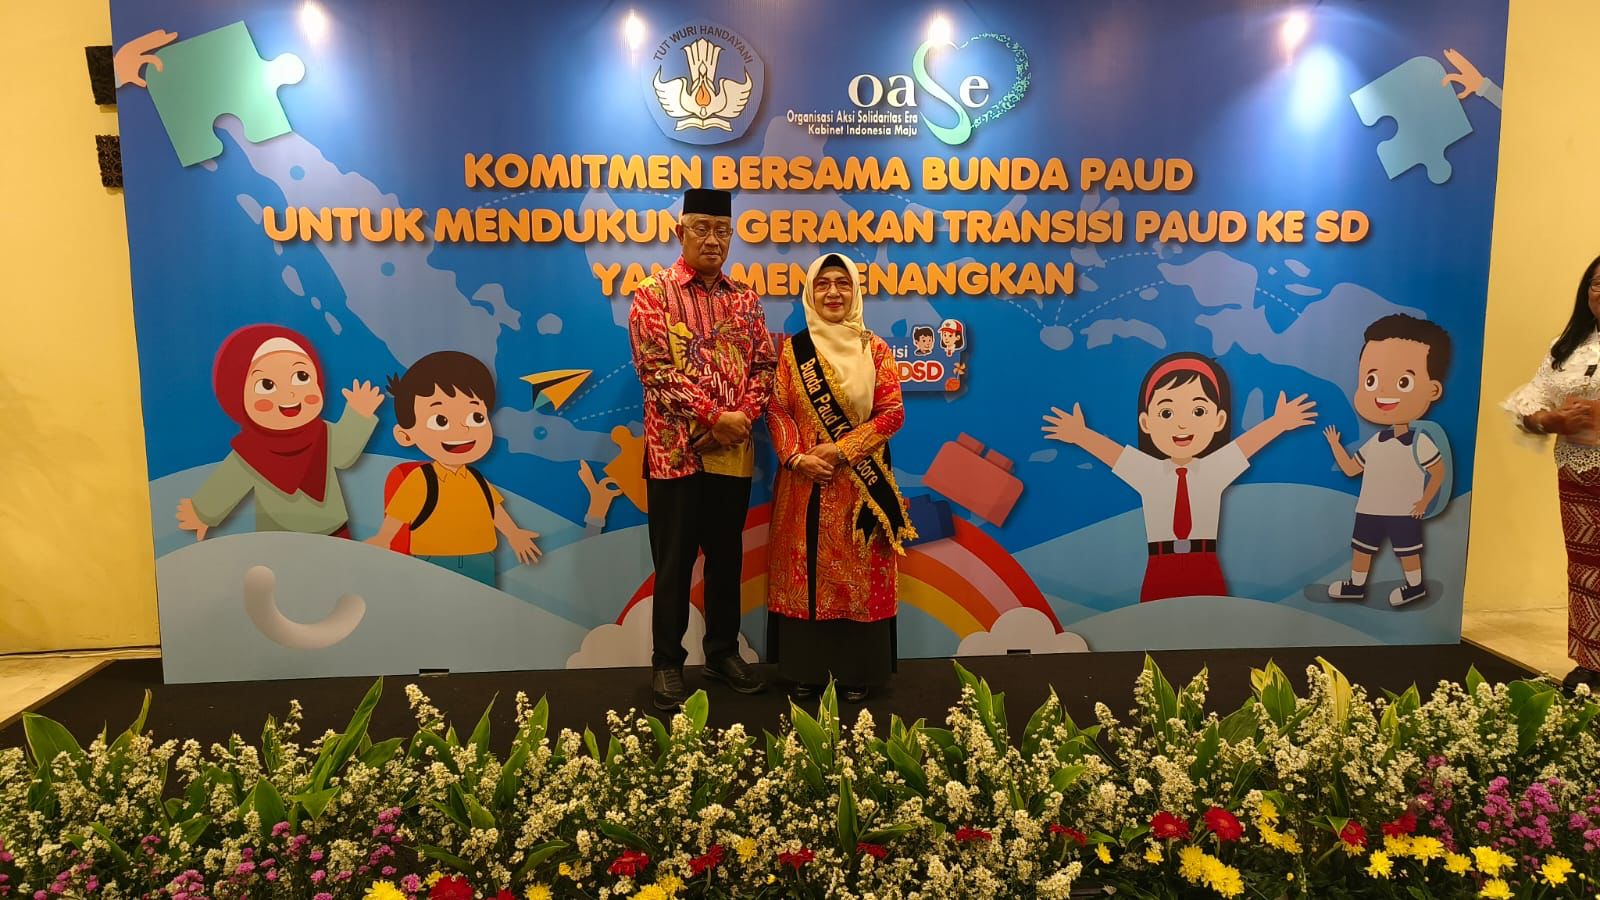 Riset dan Teknologi Republik Indonesia, Nadiem Anwar Makarim Bersama Bunda PAUD Hj. Safia Ali Ibrahim (detikindonesia.co.id)